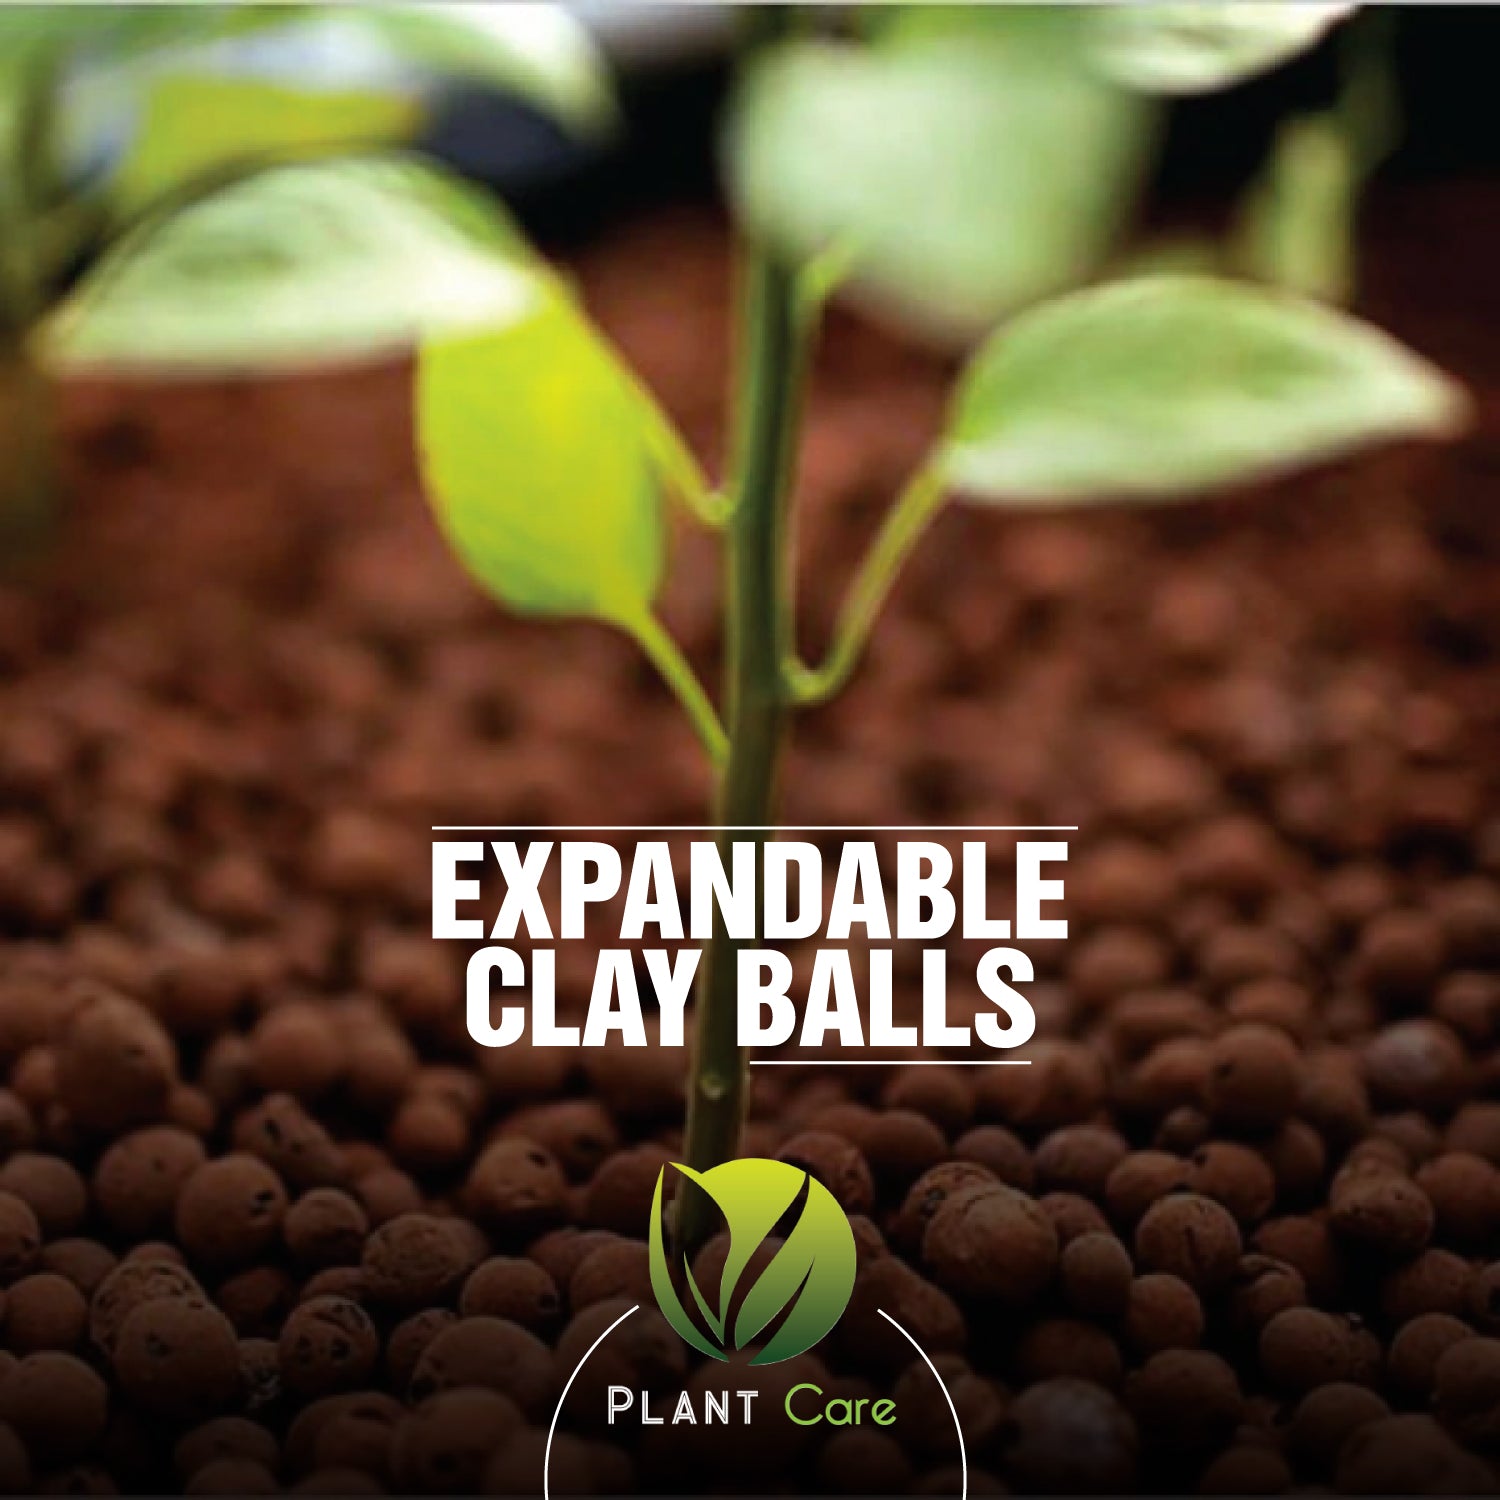 Expandable clay balls